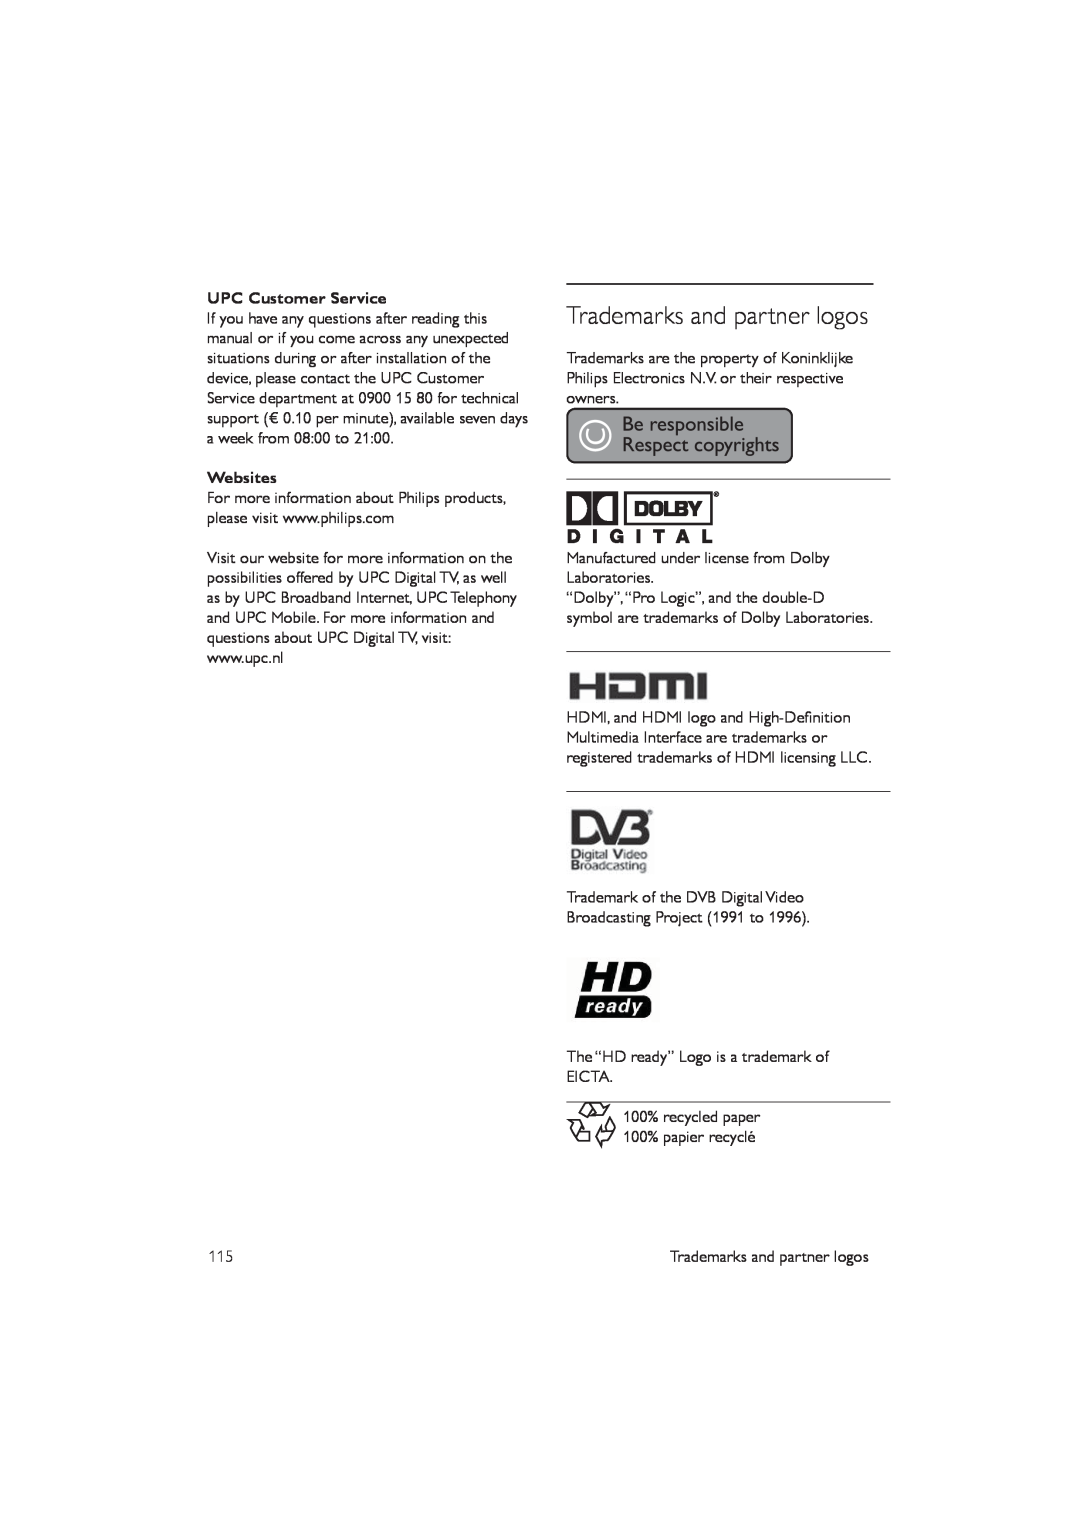 Philips DCR5012 manual Trademarks and partner logos, UPC Customer Service, Websites 